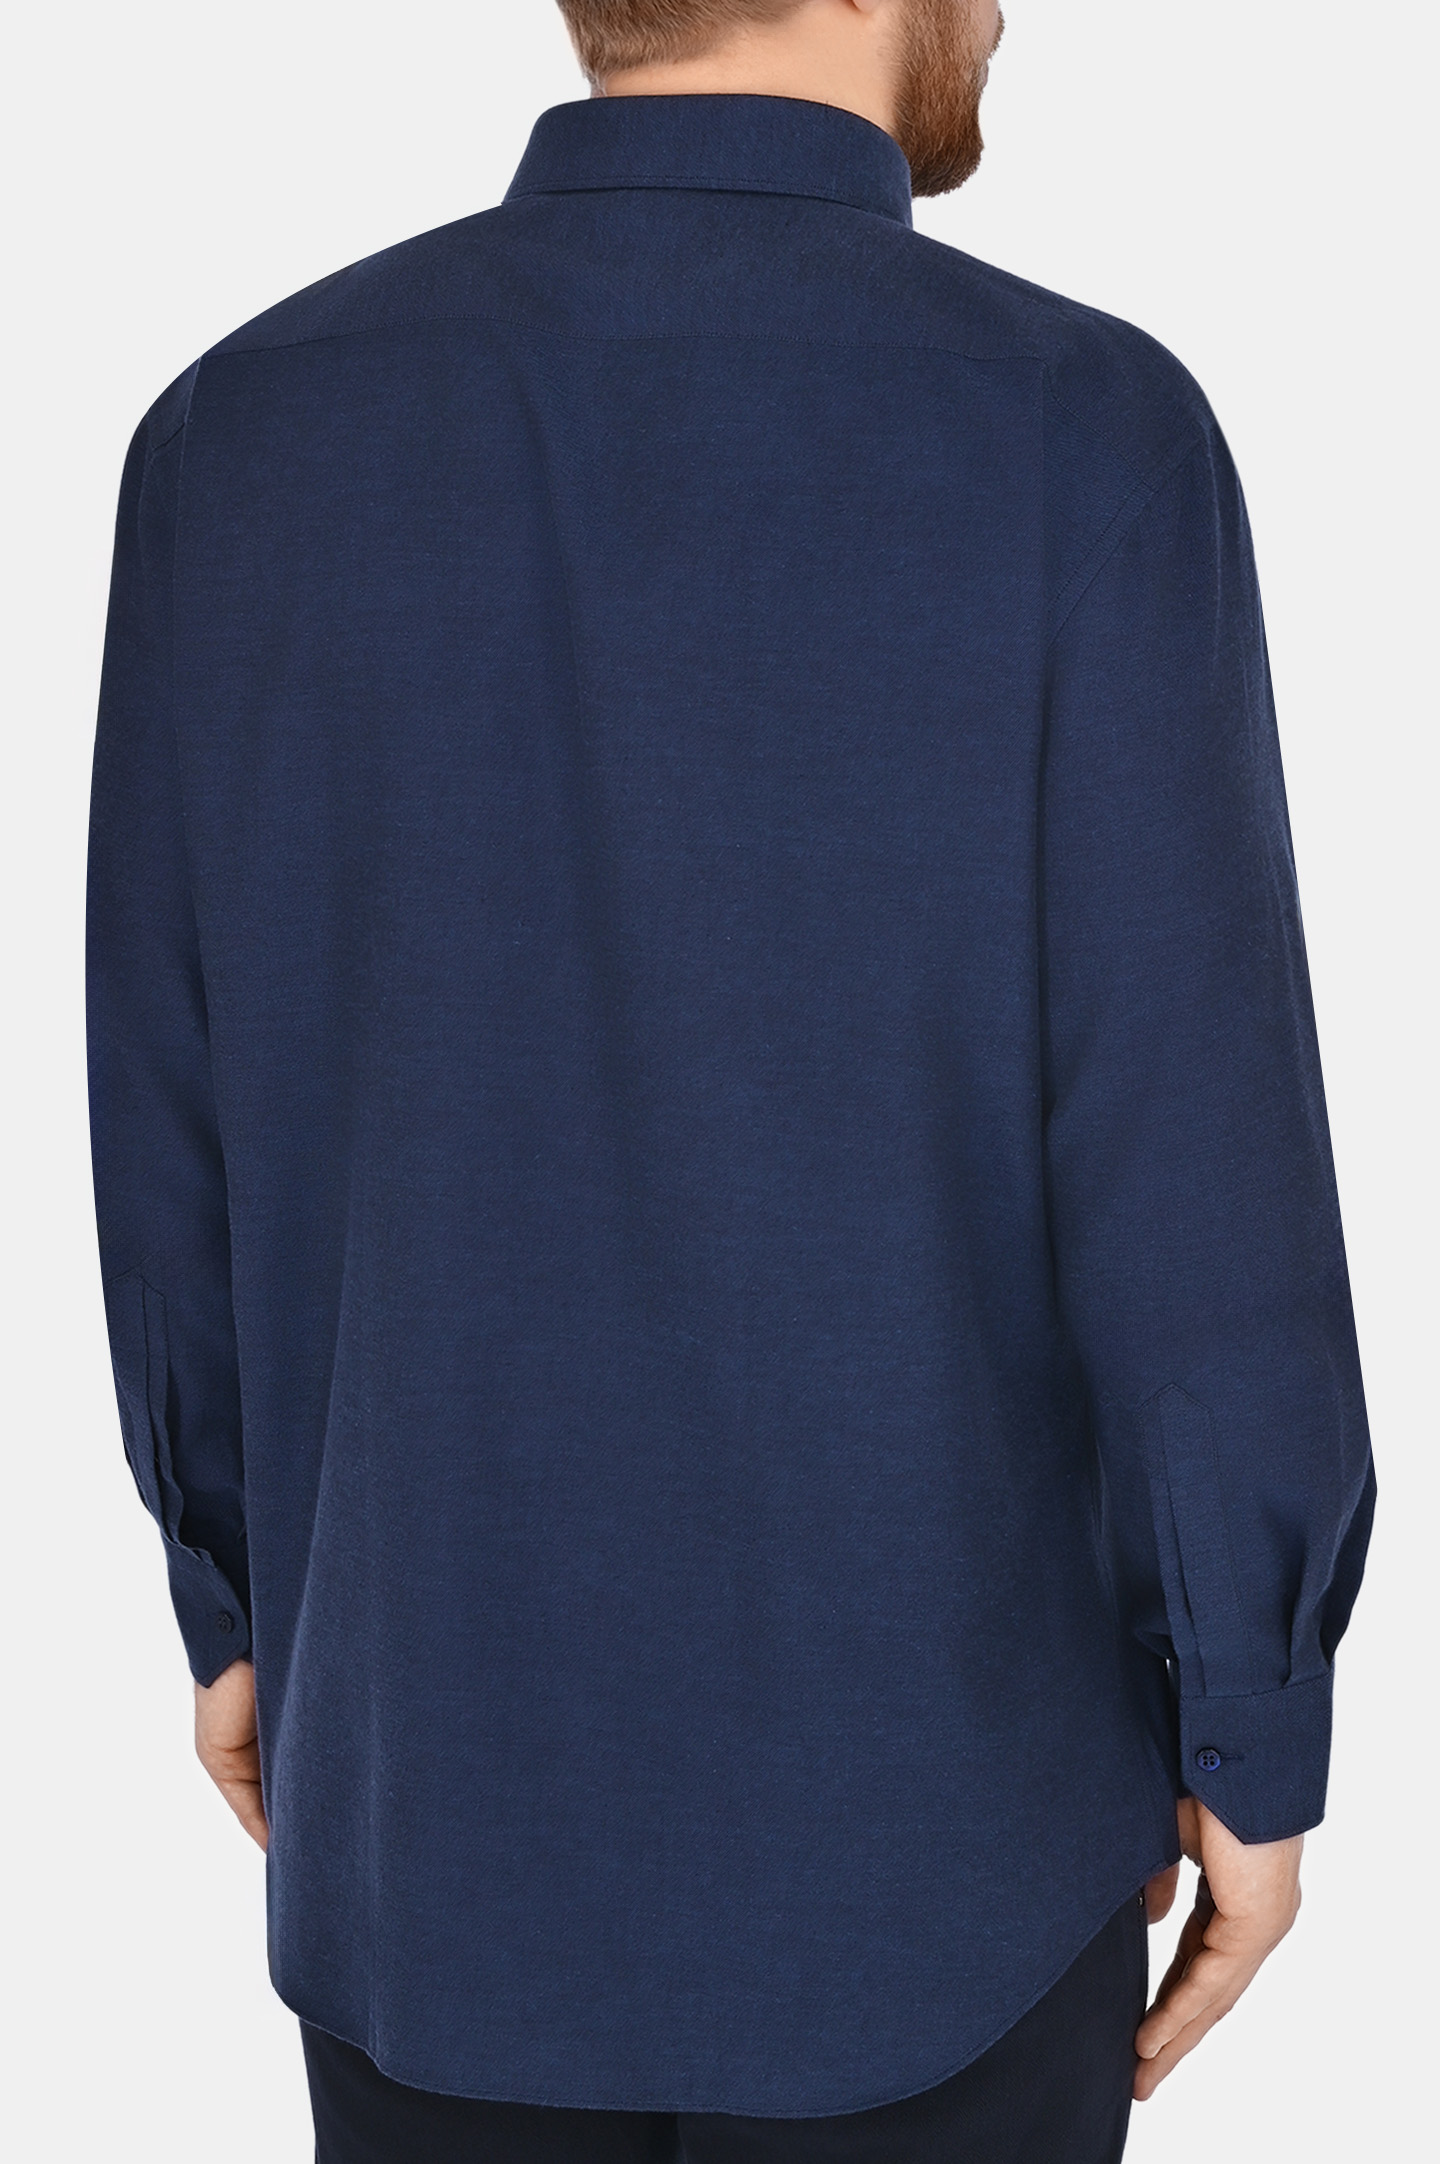 Рубашка STEFANO RICCI MC004291 S2600, цвет: Темно-синий, Мужской